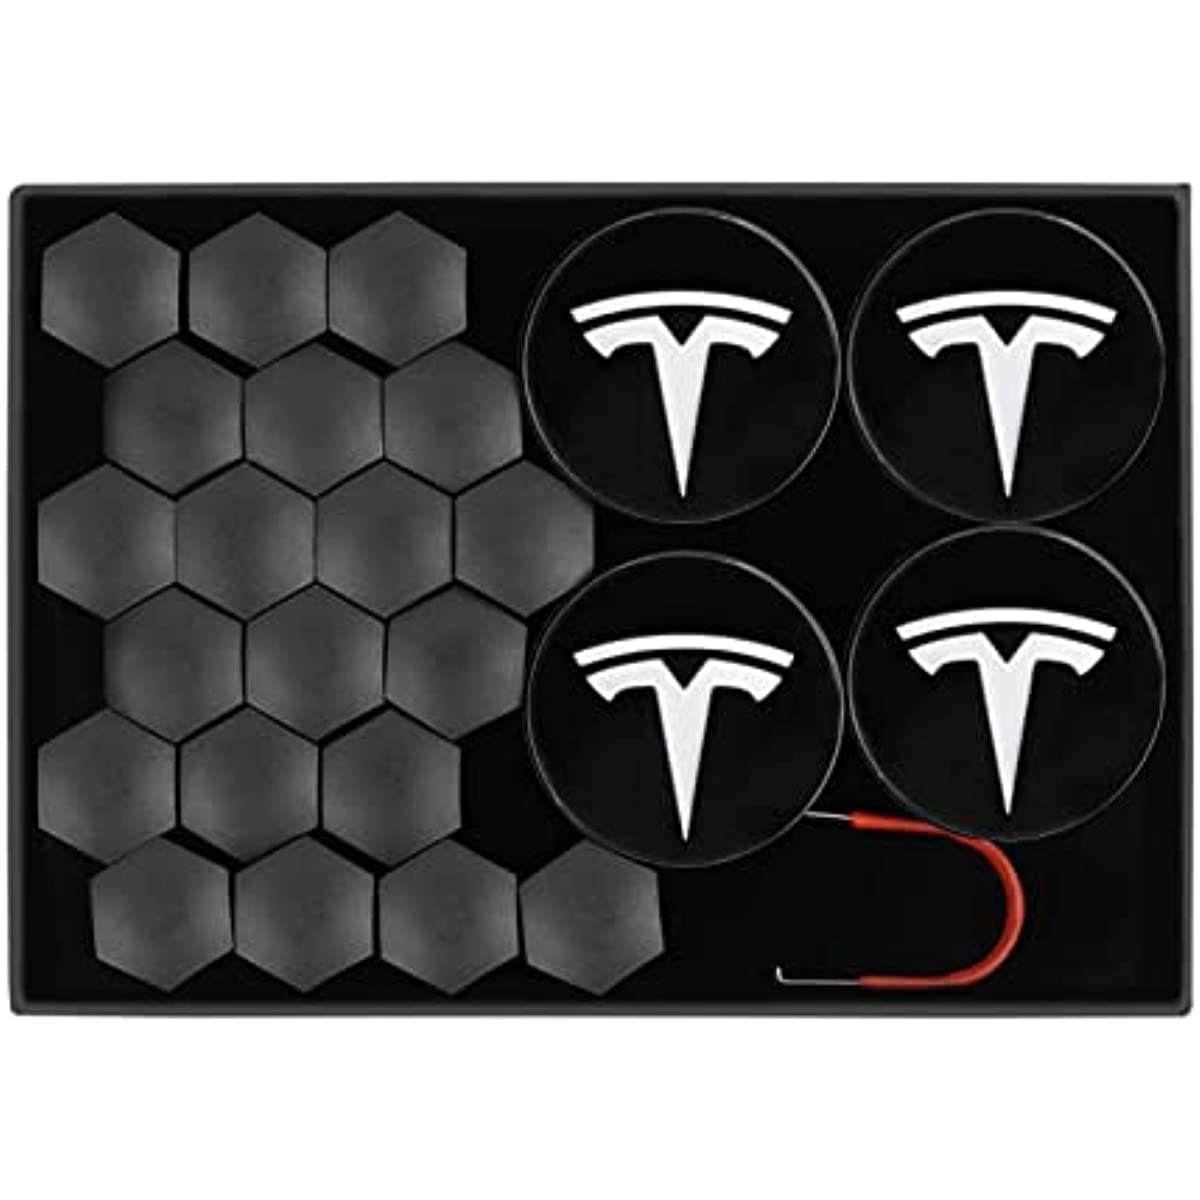 Center Cap Wheel Cap Kit for for Tesla Model 3 / Y / X / S - acetesla